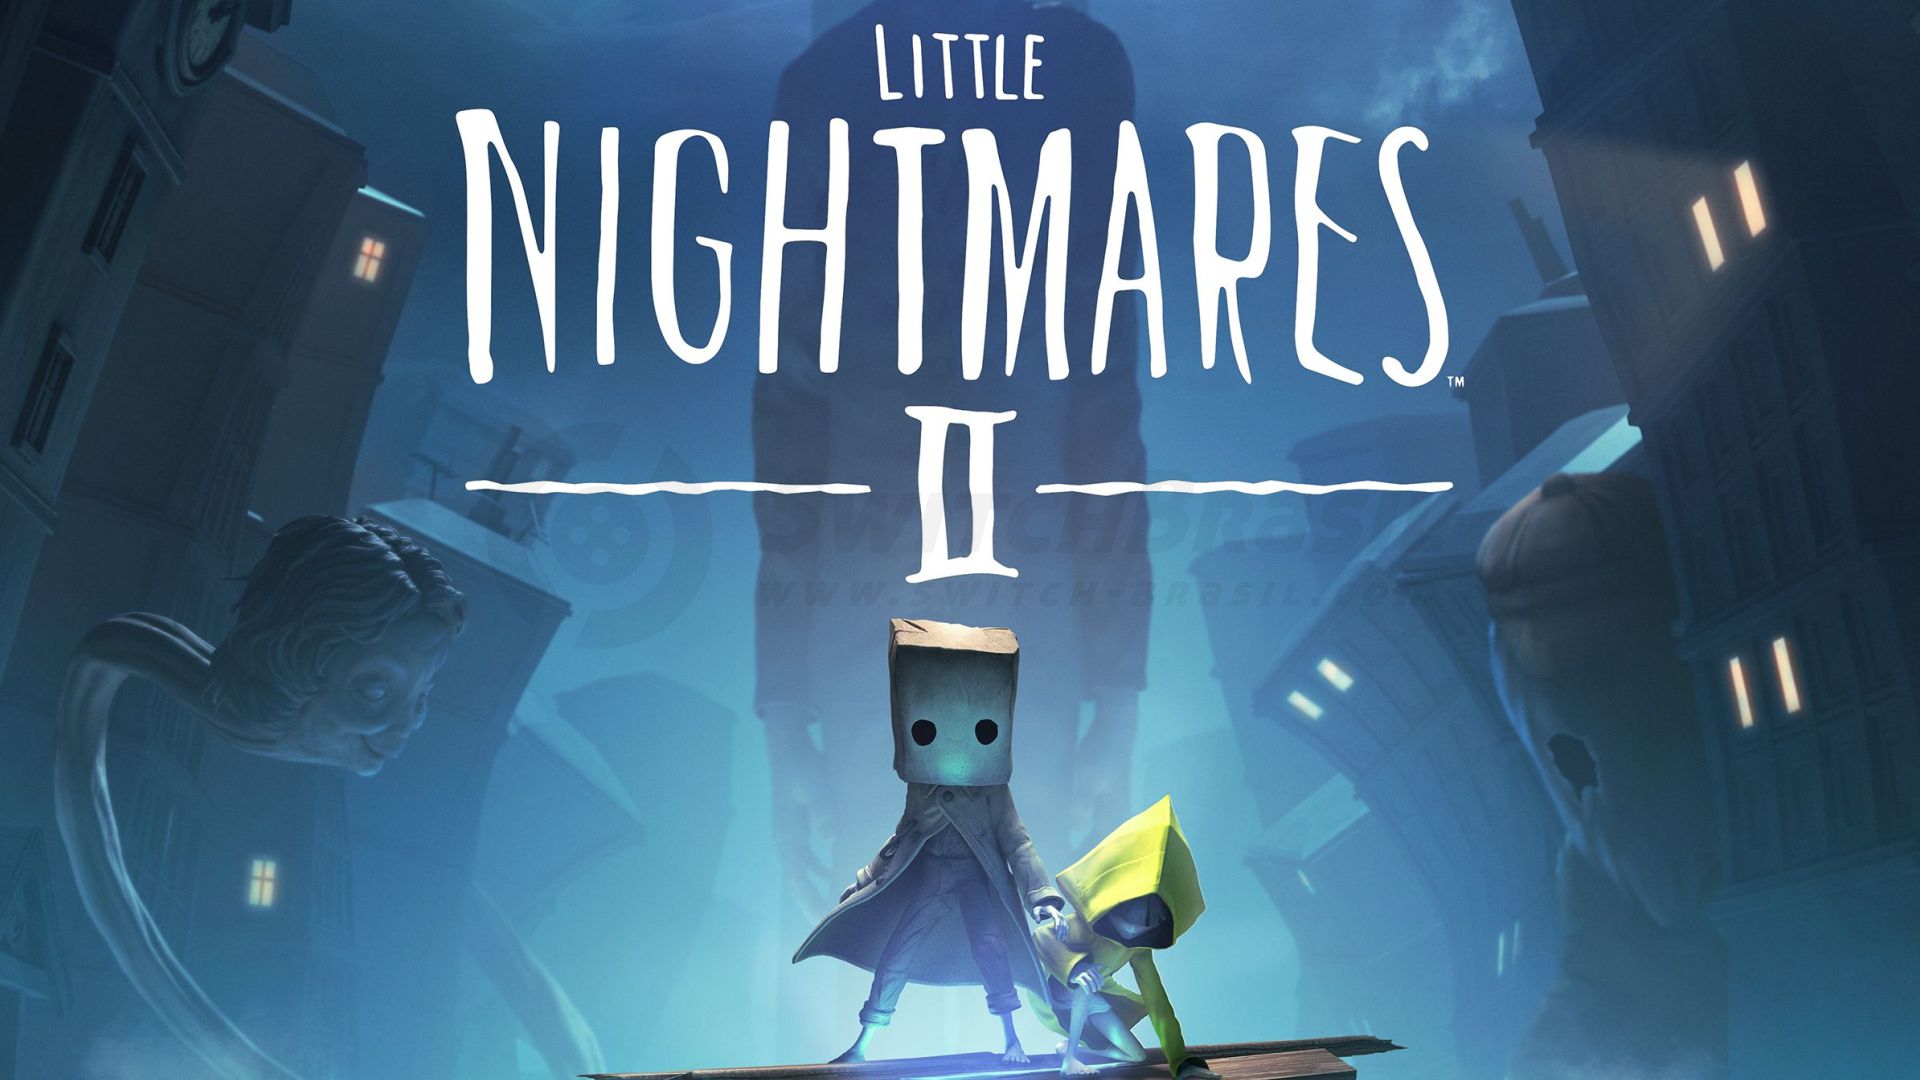 Is Little Nightmares 2 player?